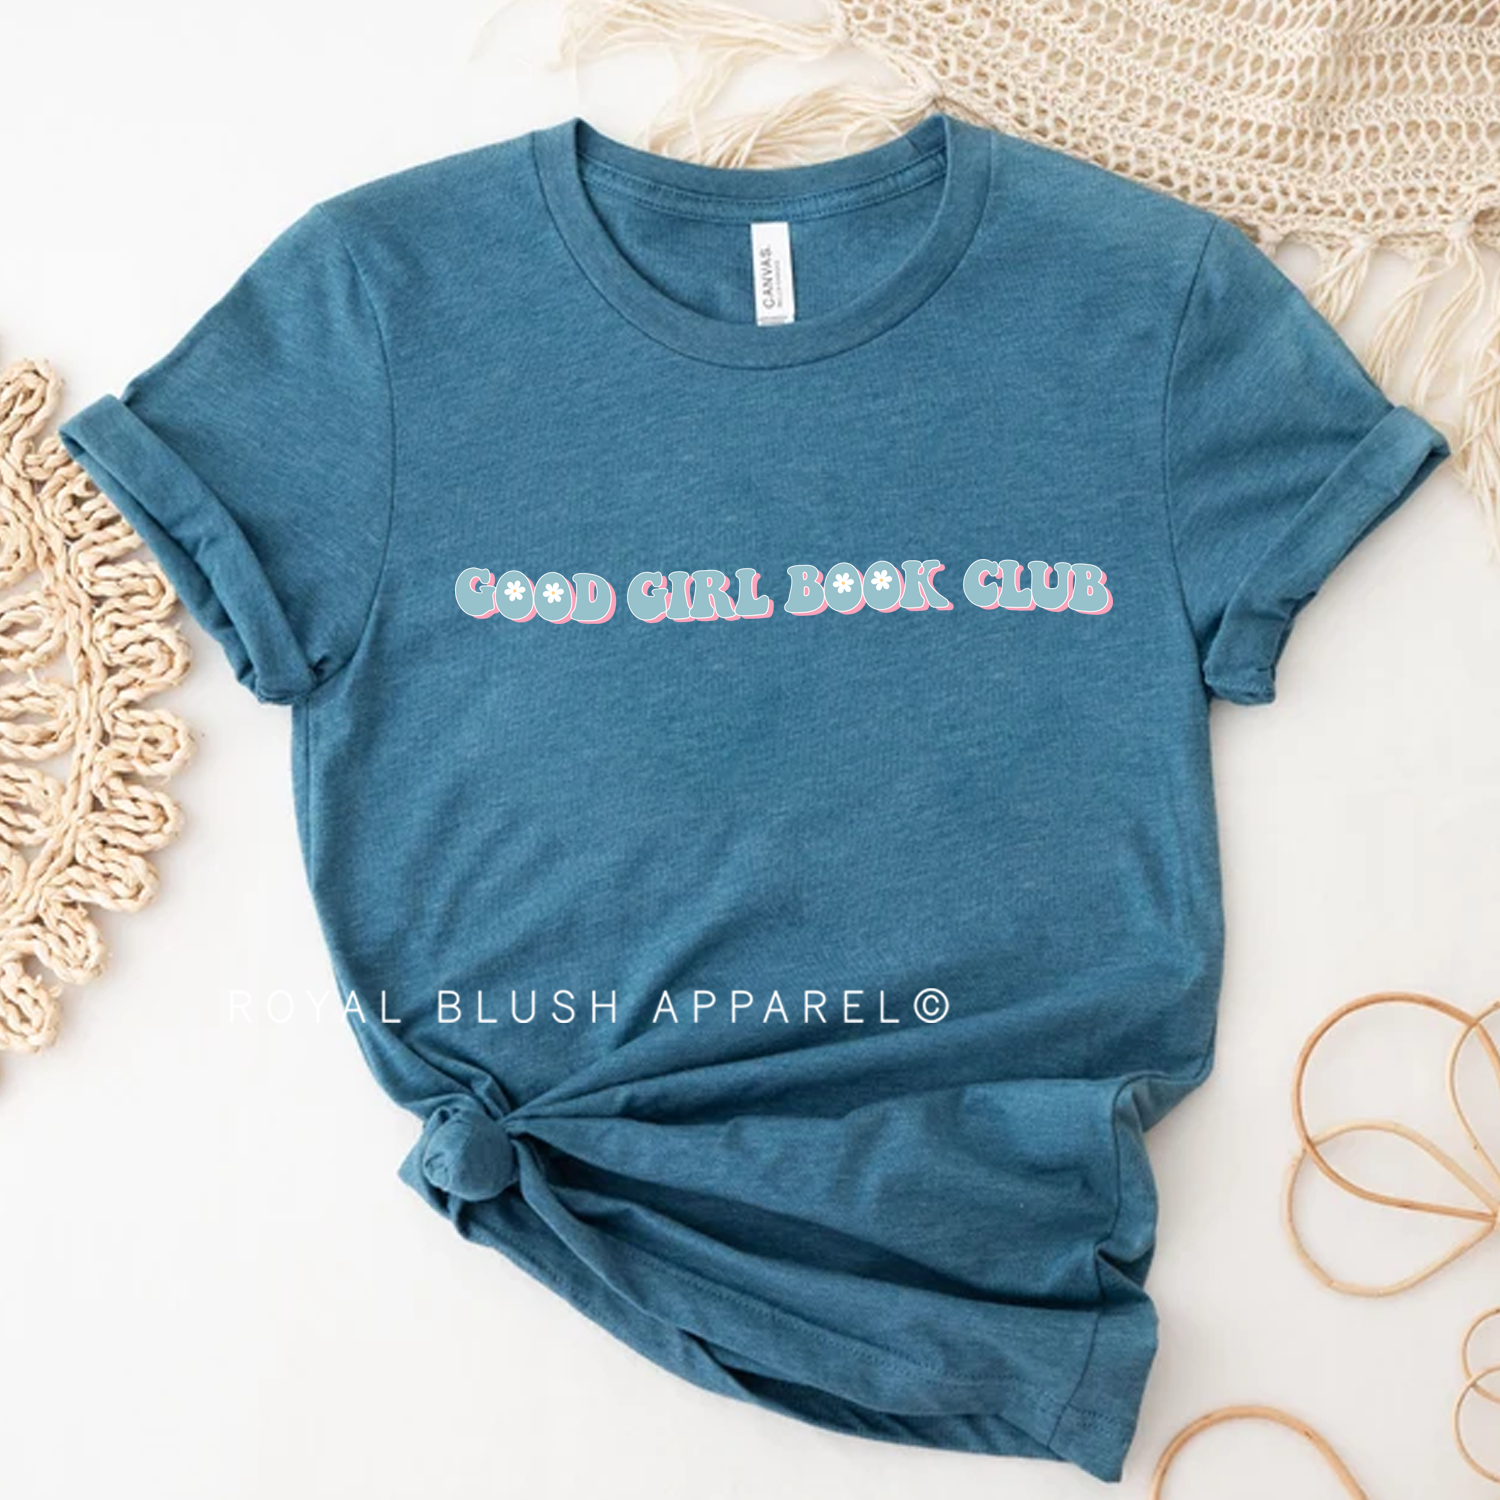 Good Girl Book Club Relaxed Unisex T-shirt